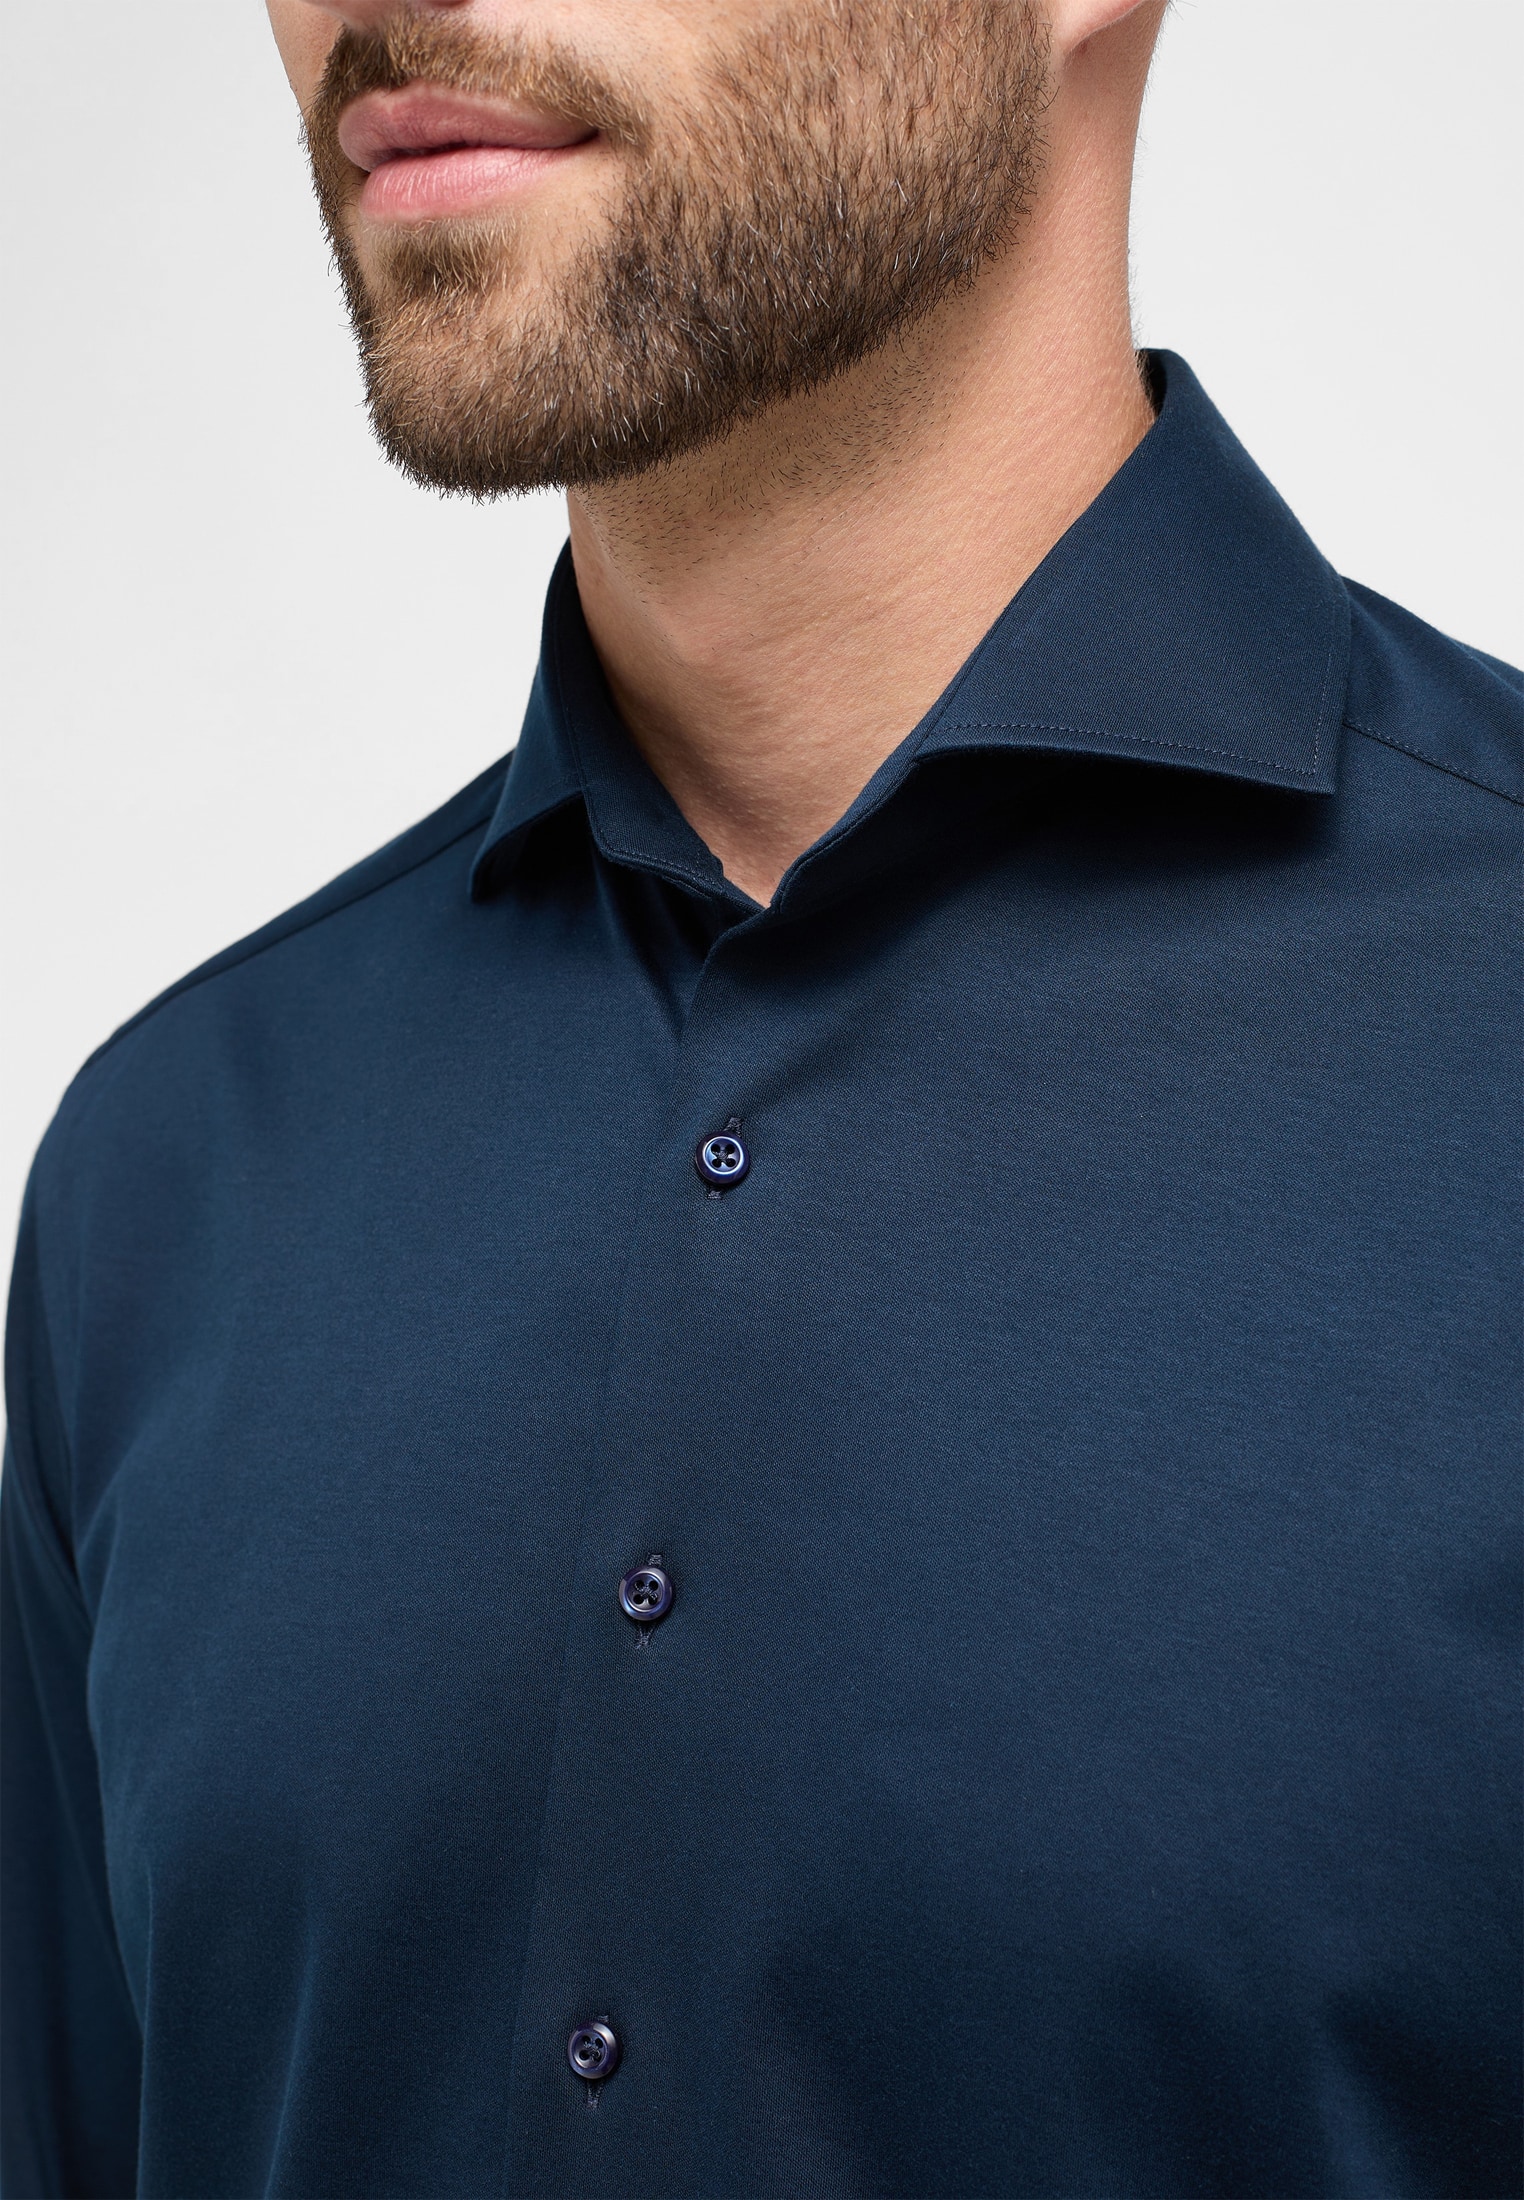 FIT | 1SH00376-01-81-46-1/1 | Shirt in dunkelblau Jersey dunkelblau | 46 COMFORT | Langarm unifarben